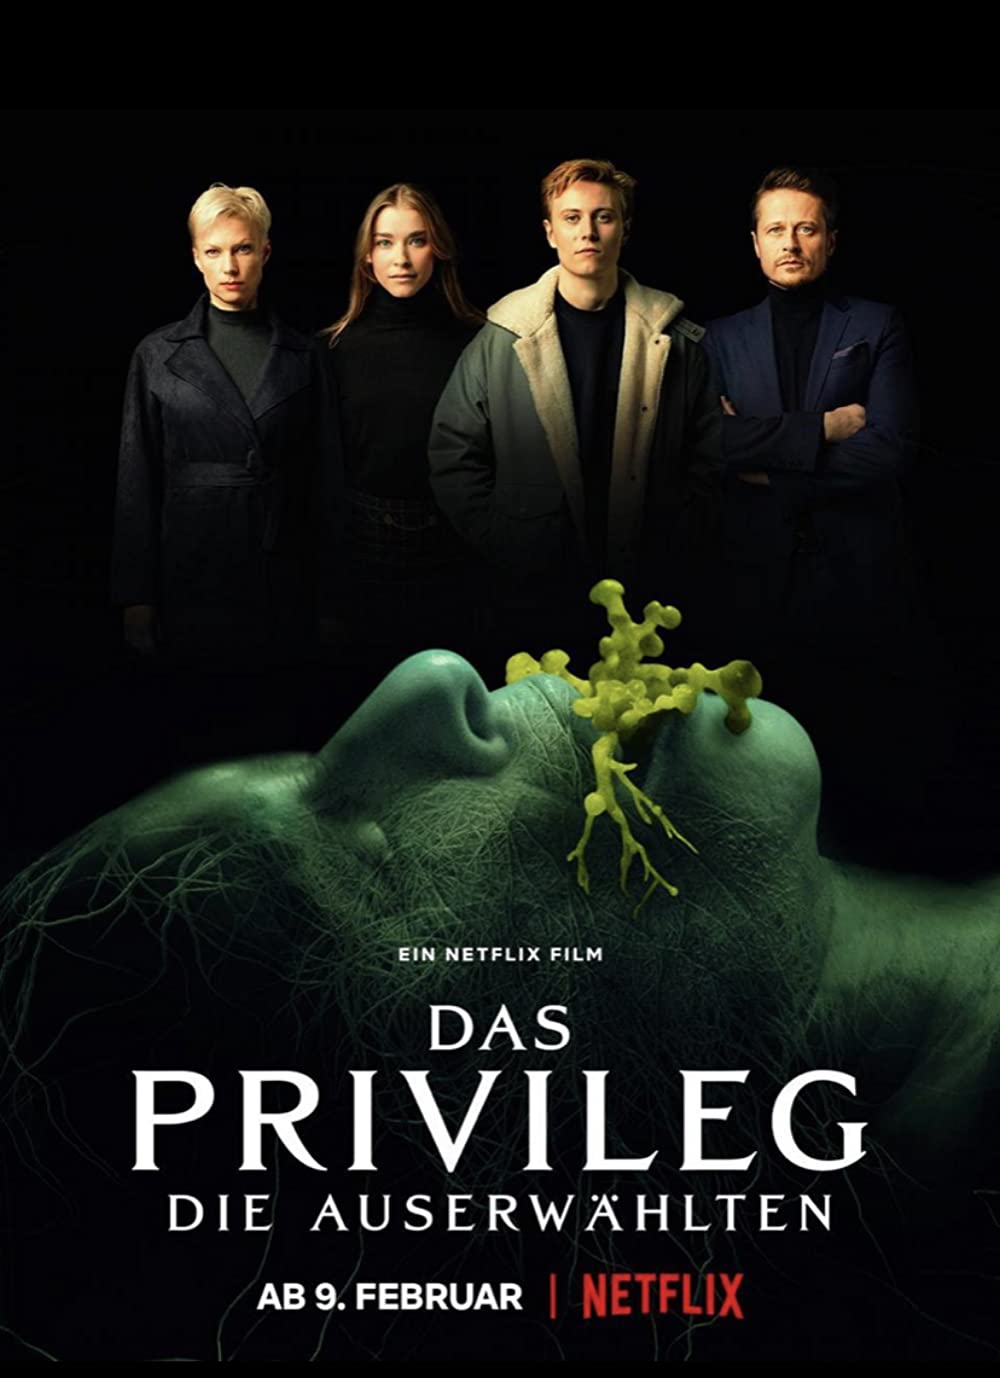 The Privilege เดอะ พริวิเลจ (2022)